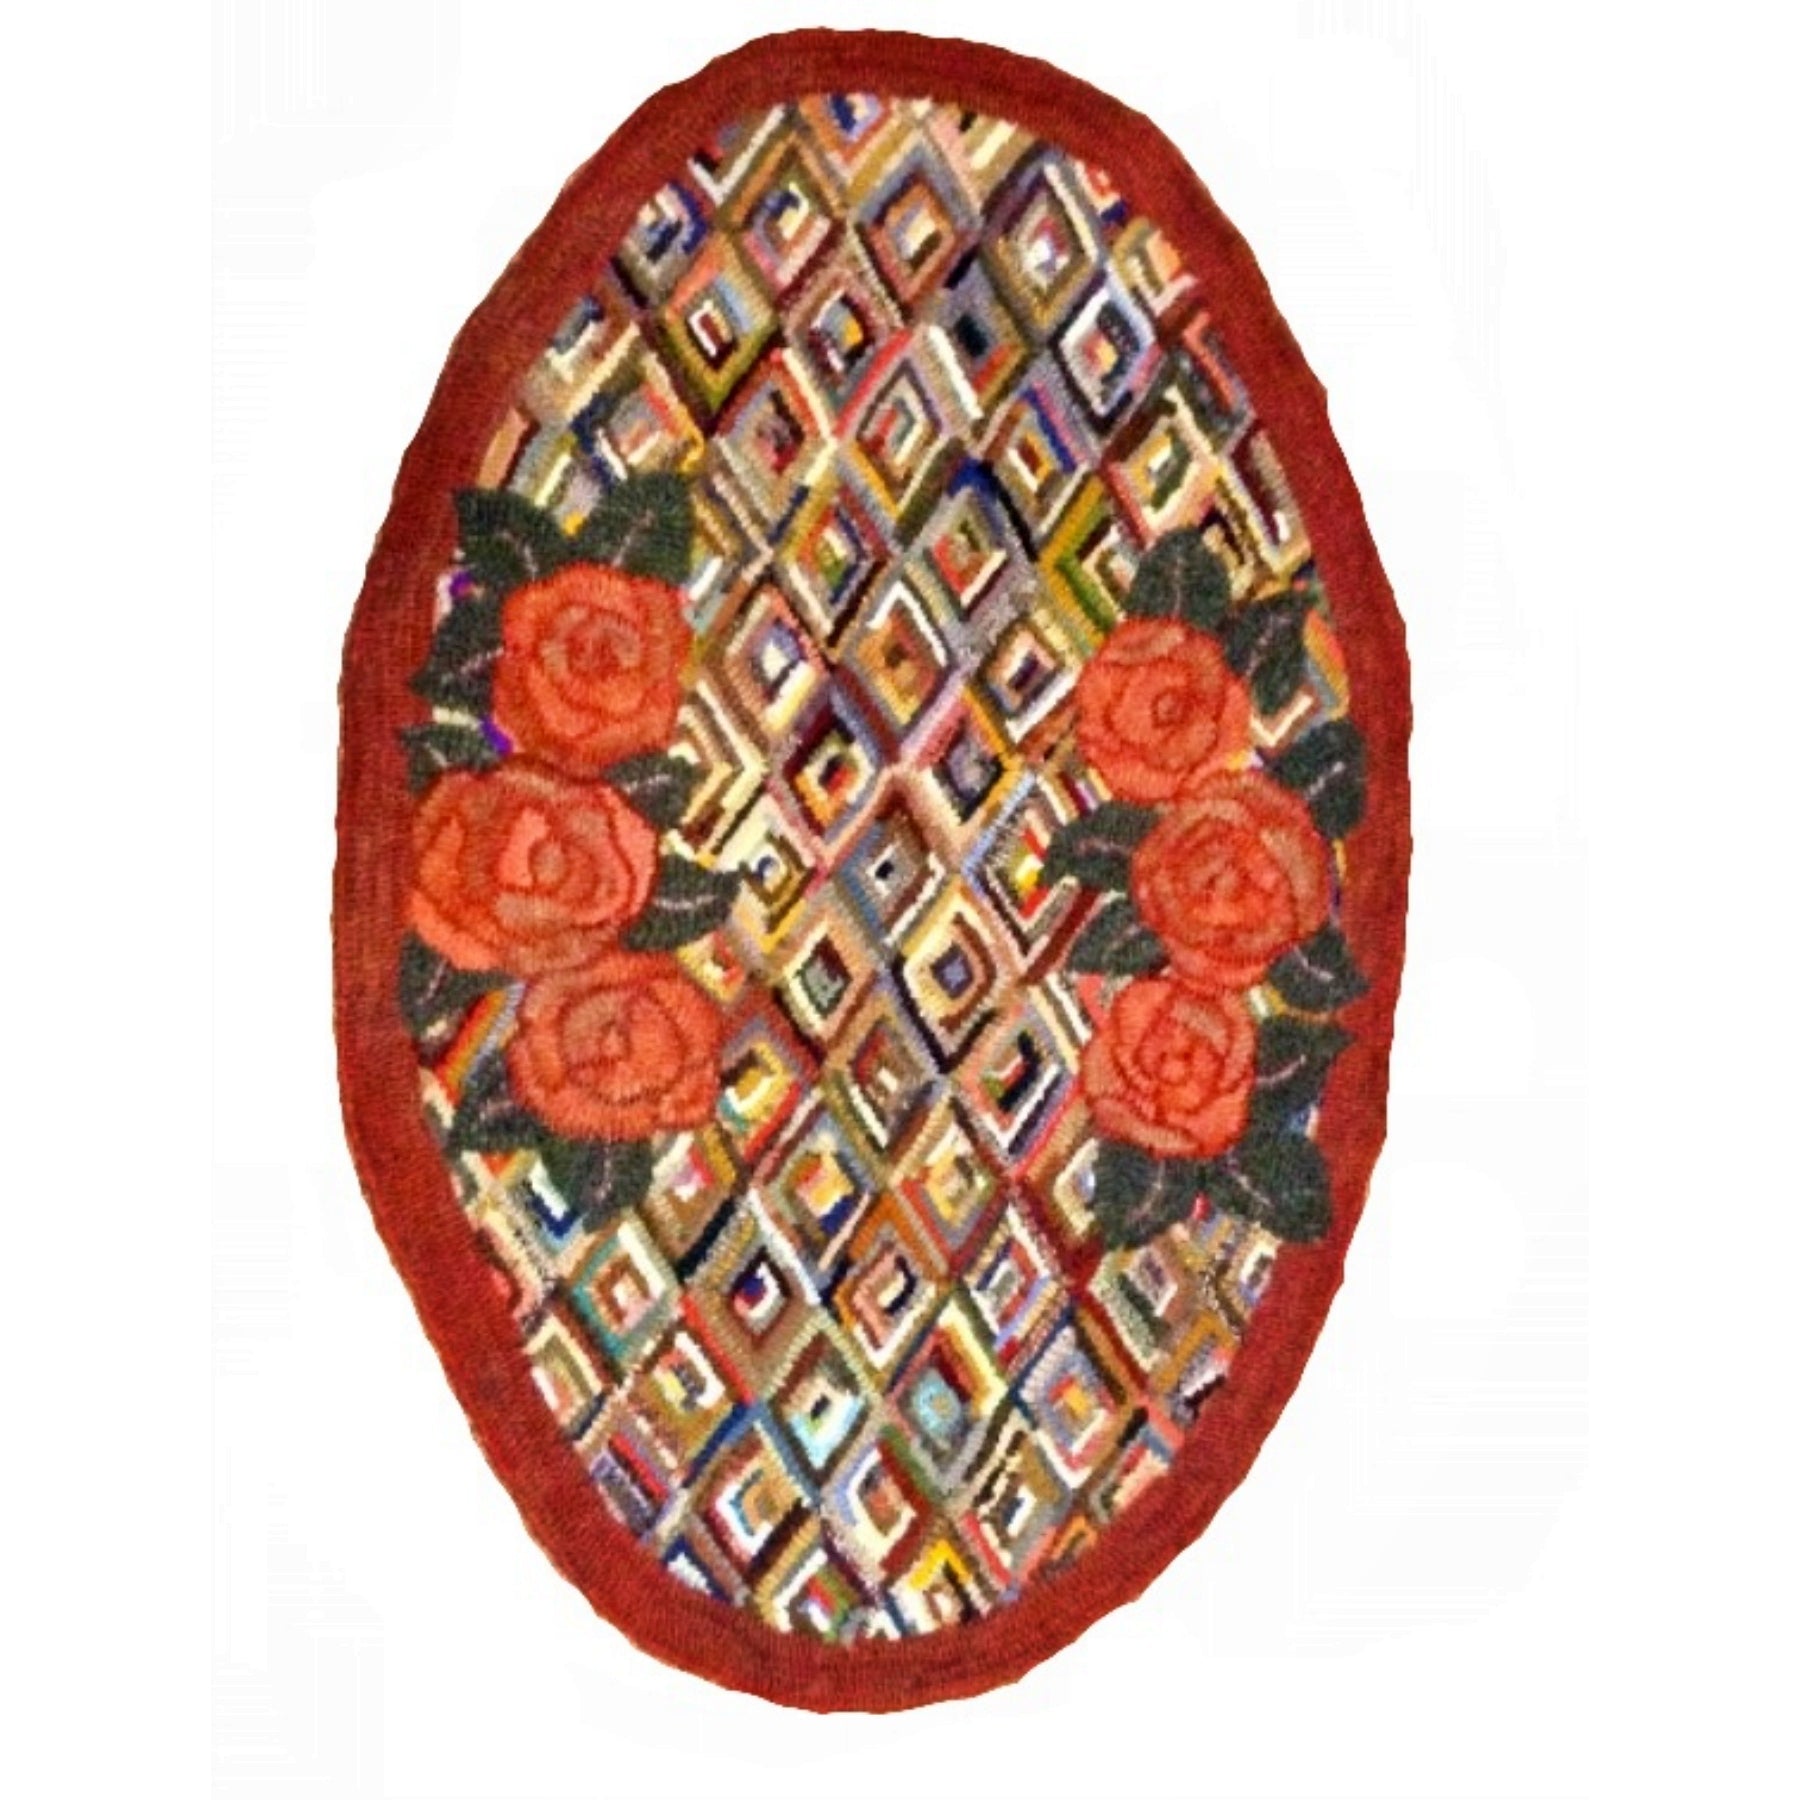 Grandmother's Rug, rug hooked by Joyce DiGregorio (adapted)